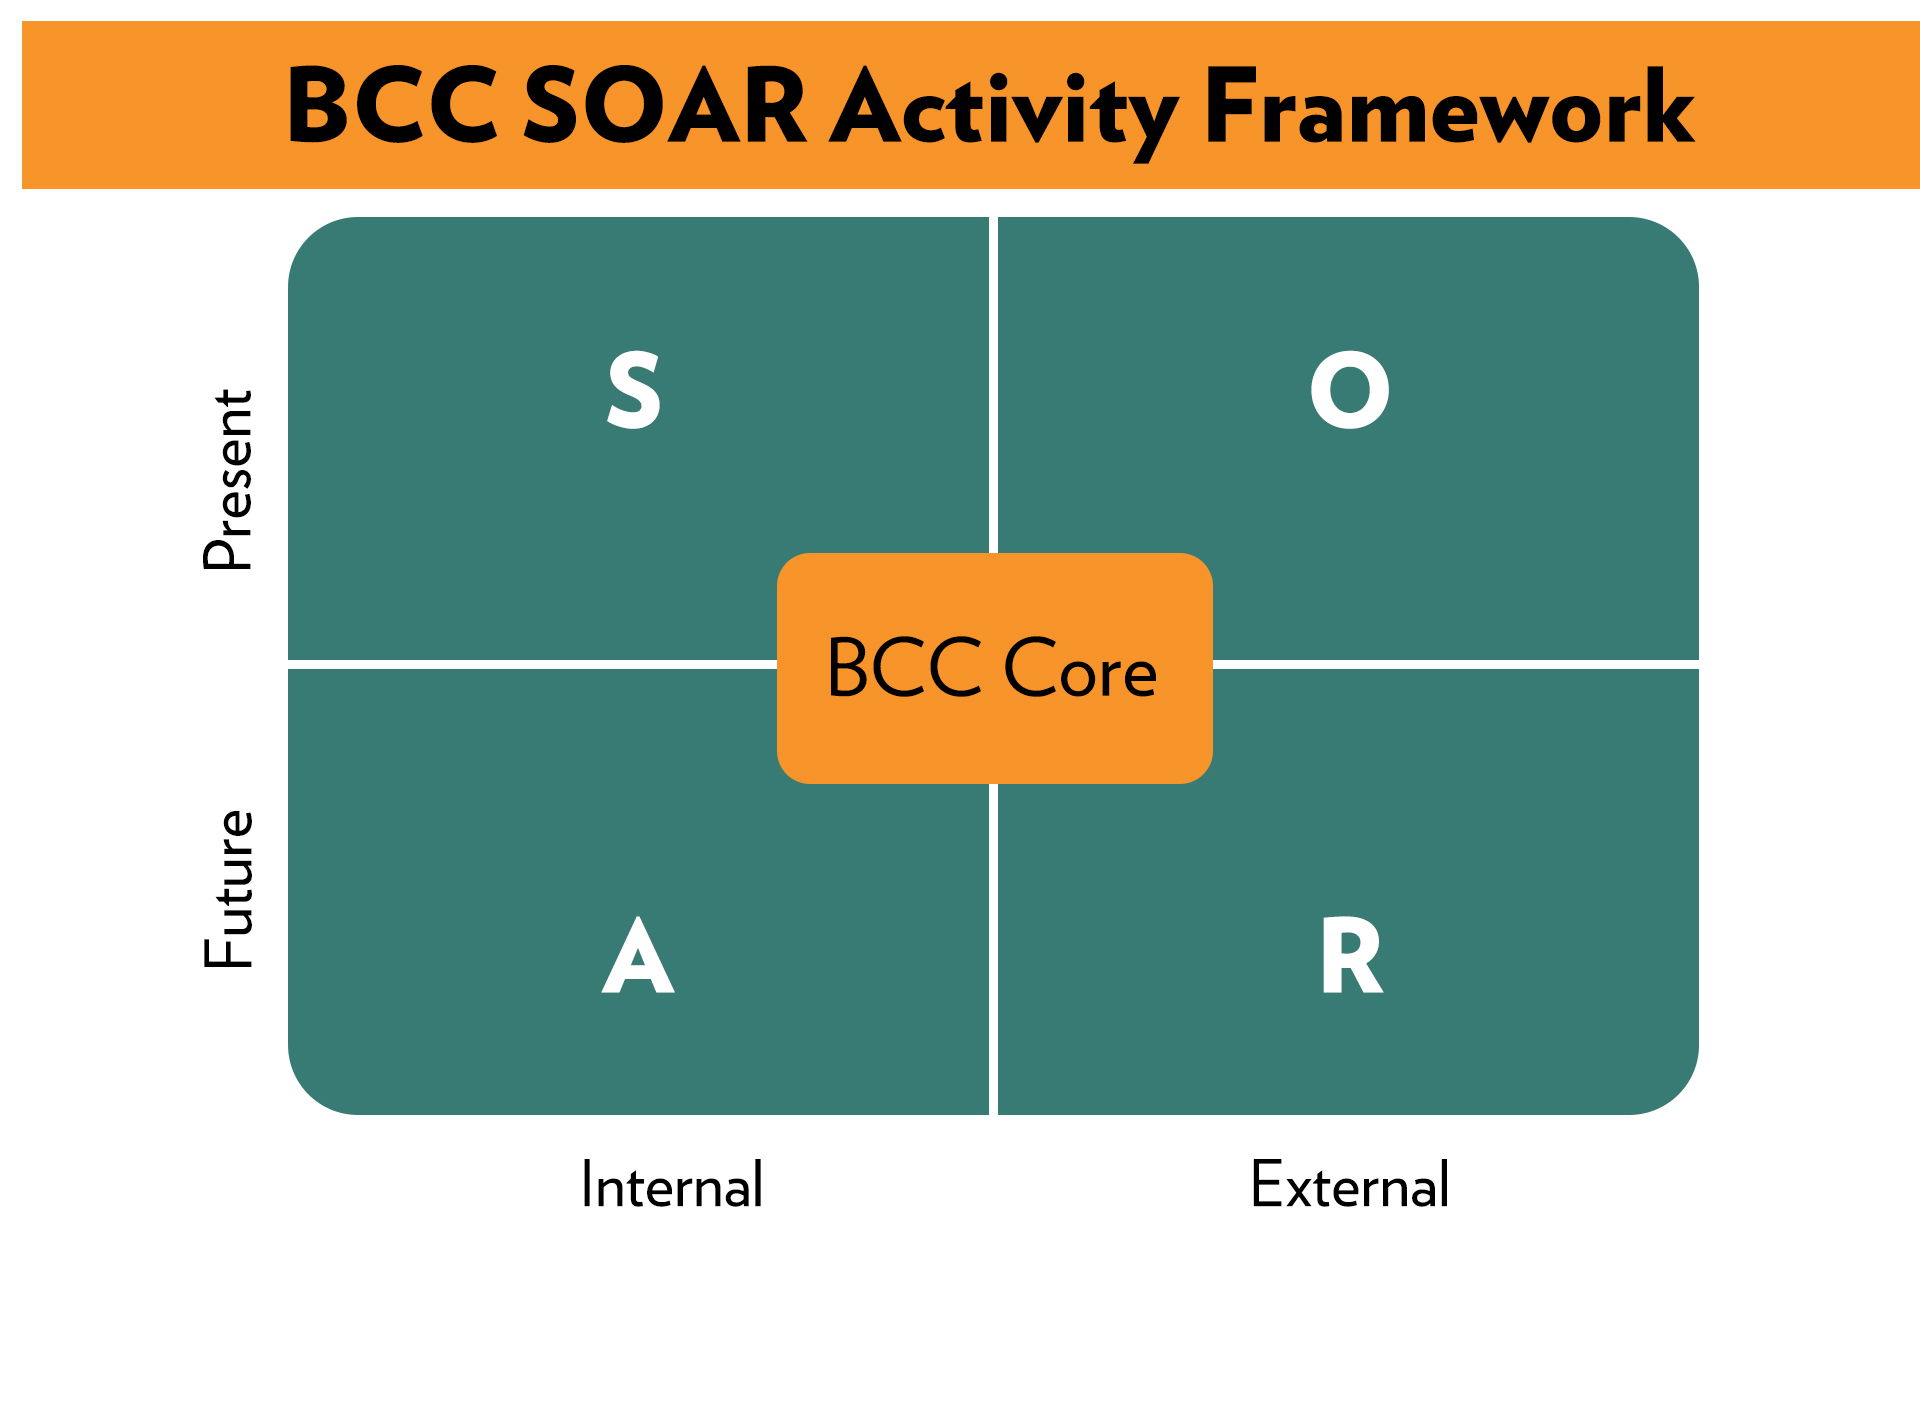 Graphic of BCC SOAR Activity Framework: future, present, internal, external, BCC core